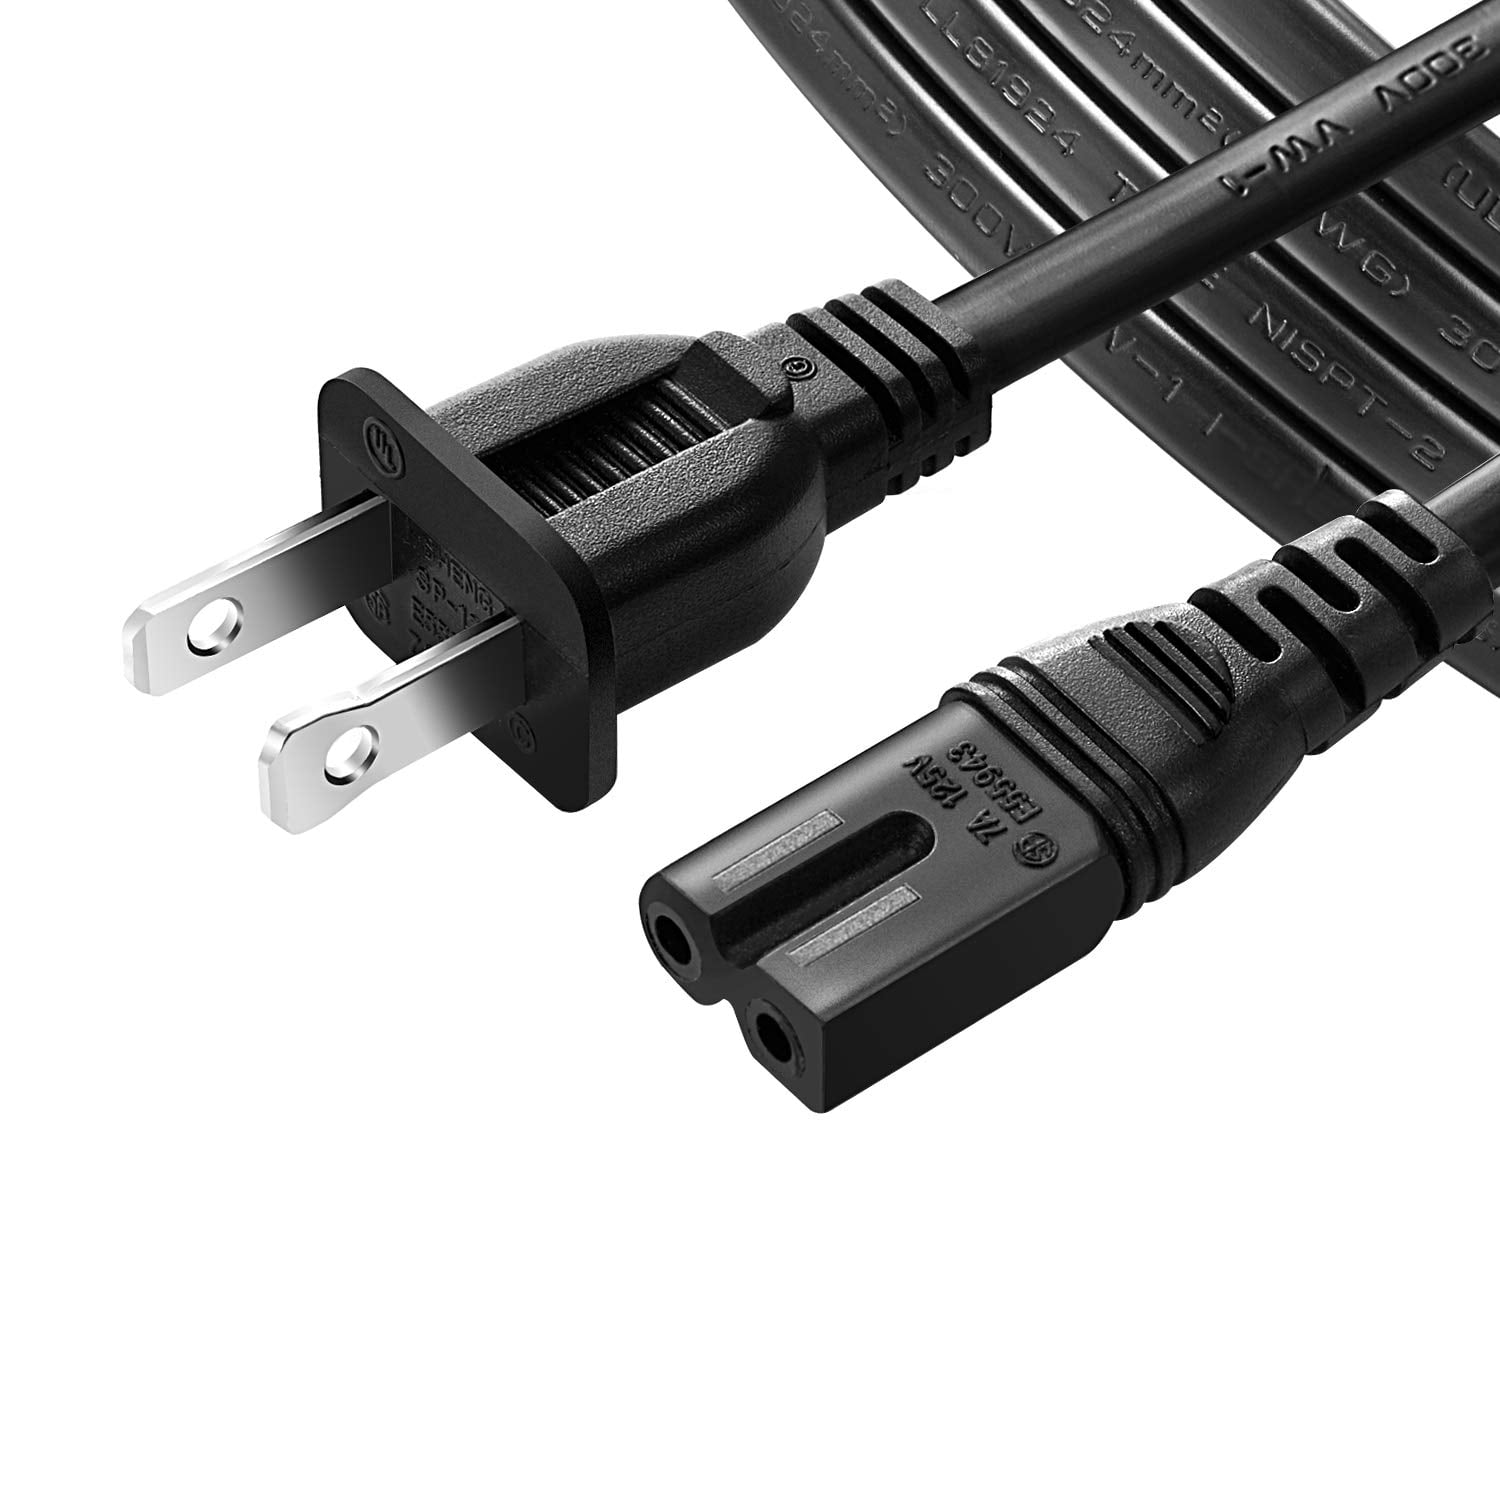 6 Ft Long Polarized AC Power Cable Cord for VIZIO TV Sound Bar SB3621n-E8 